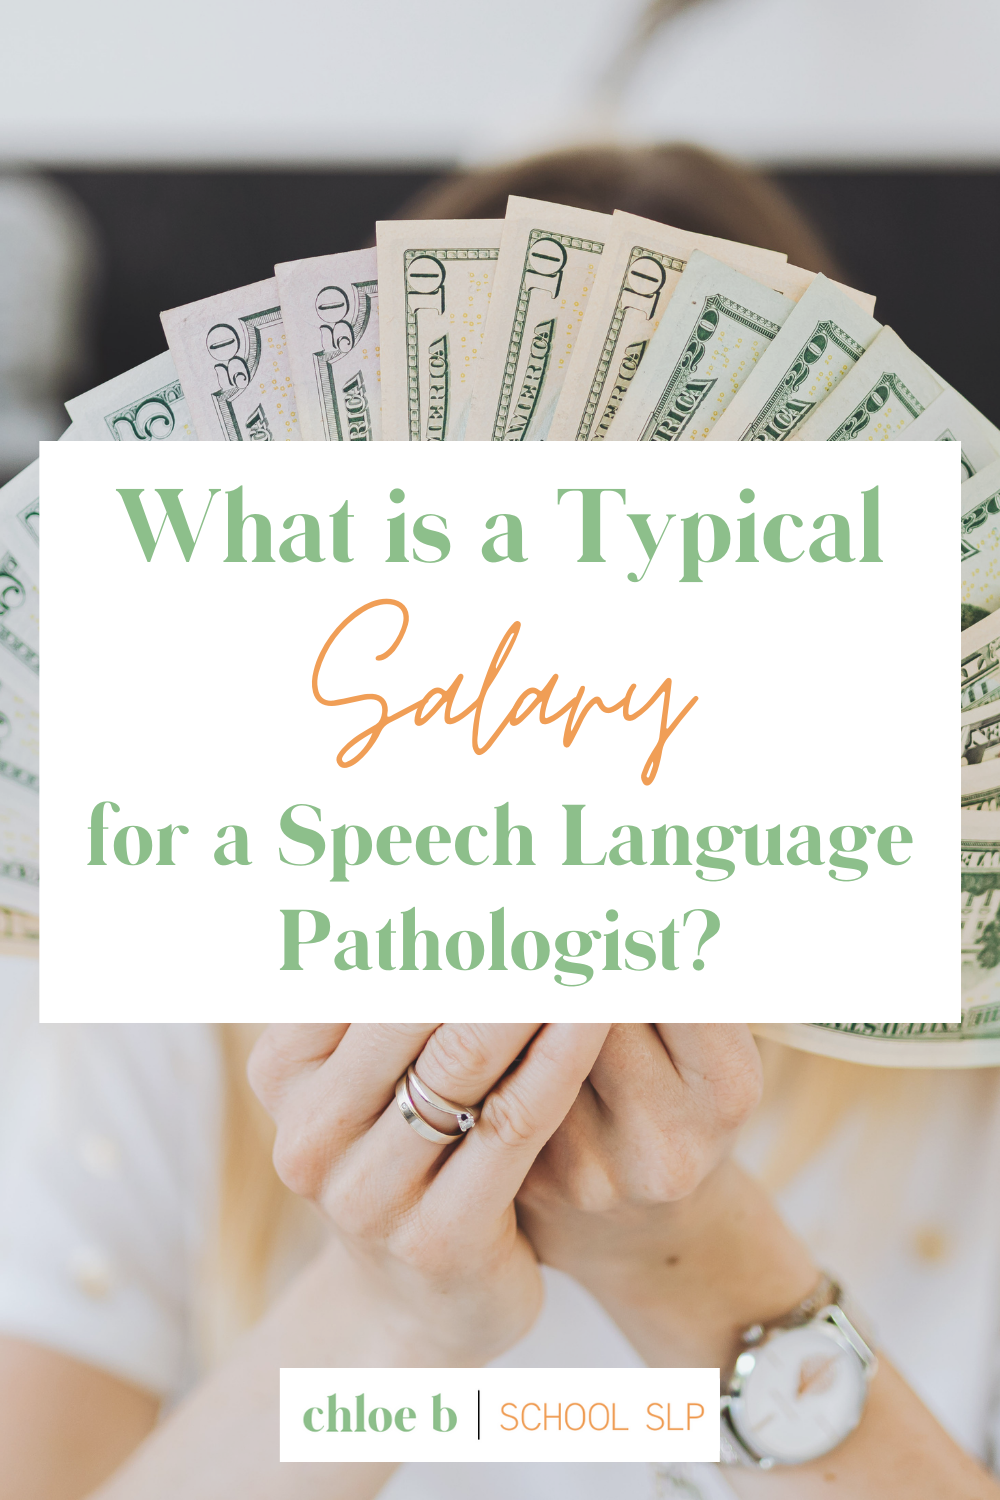 salary for a speech language pathologist